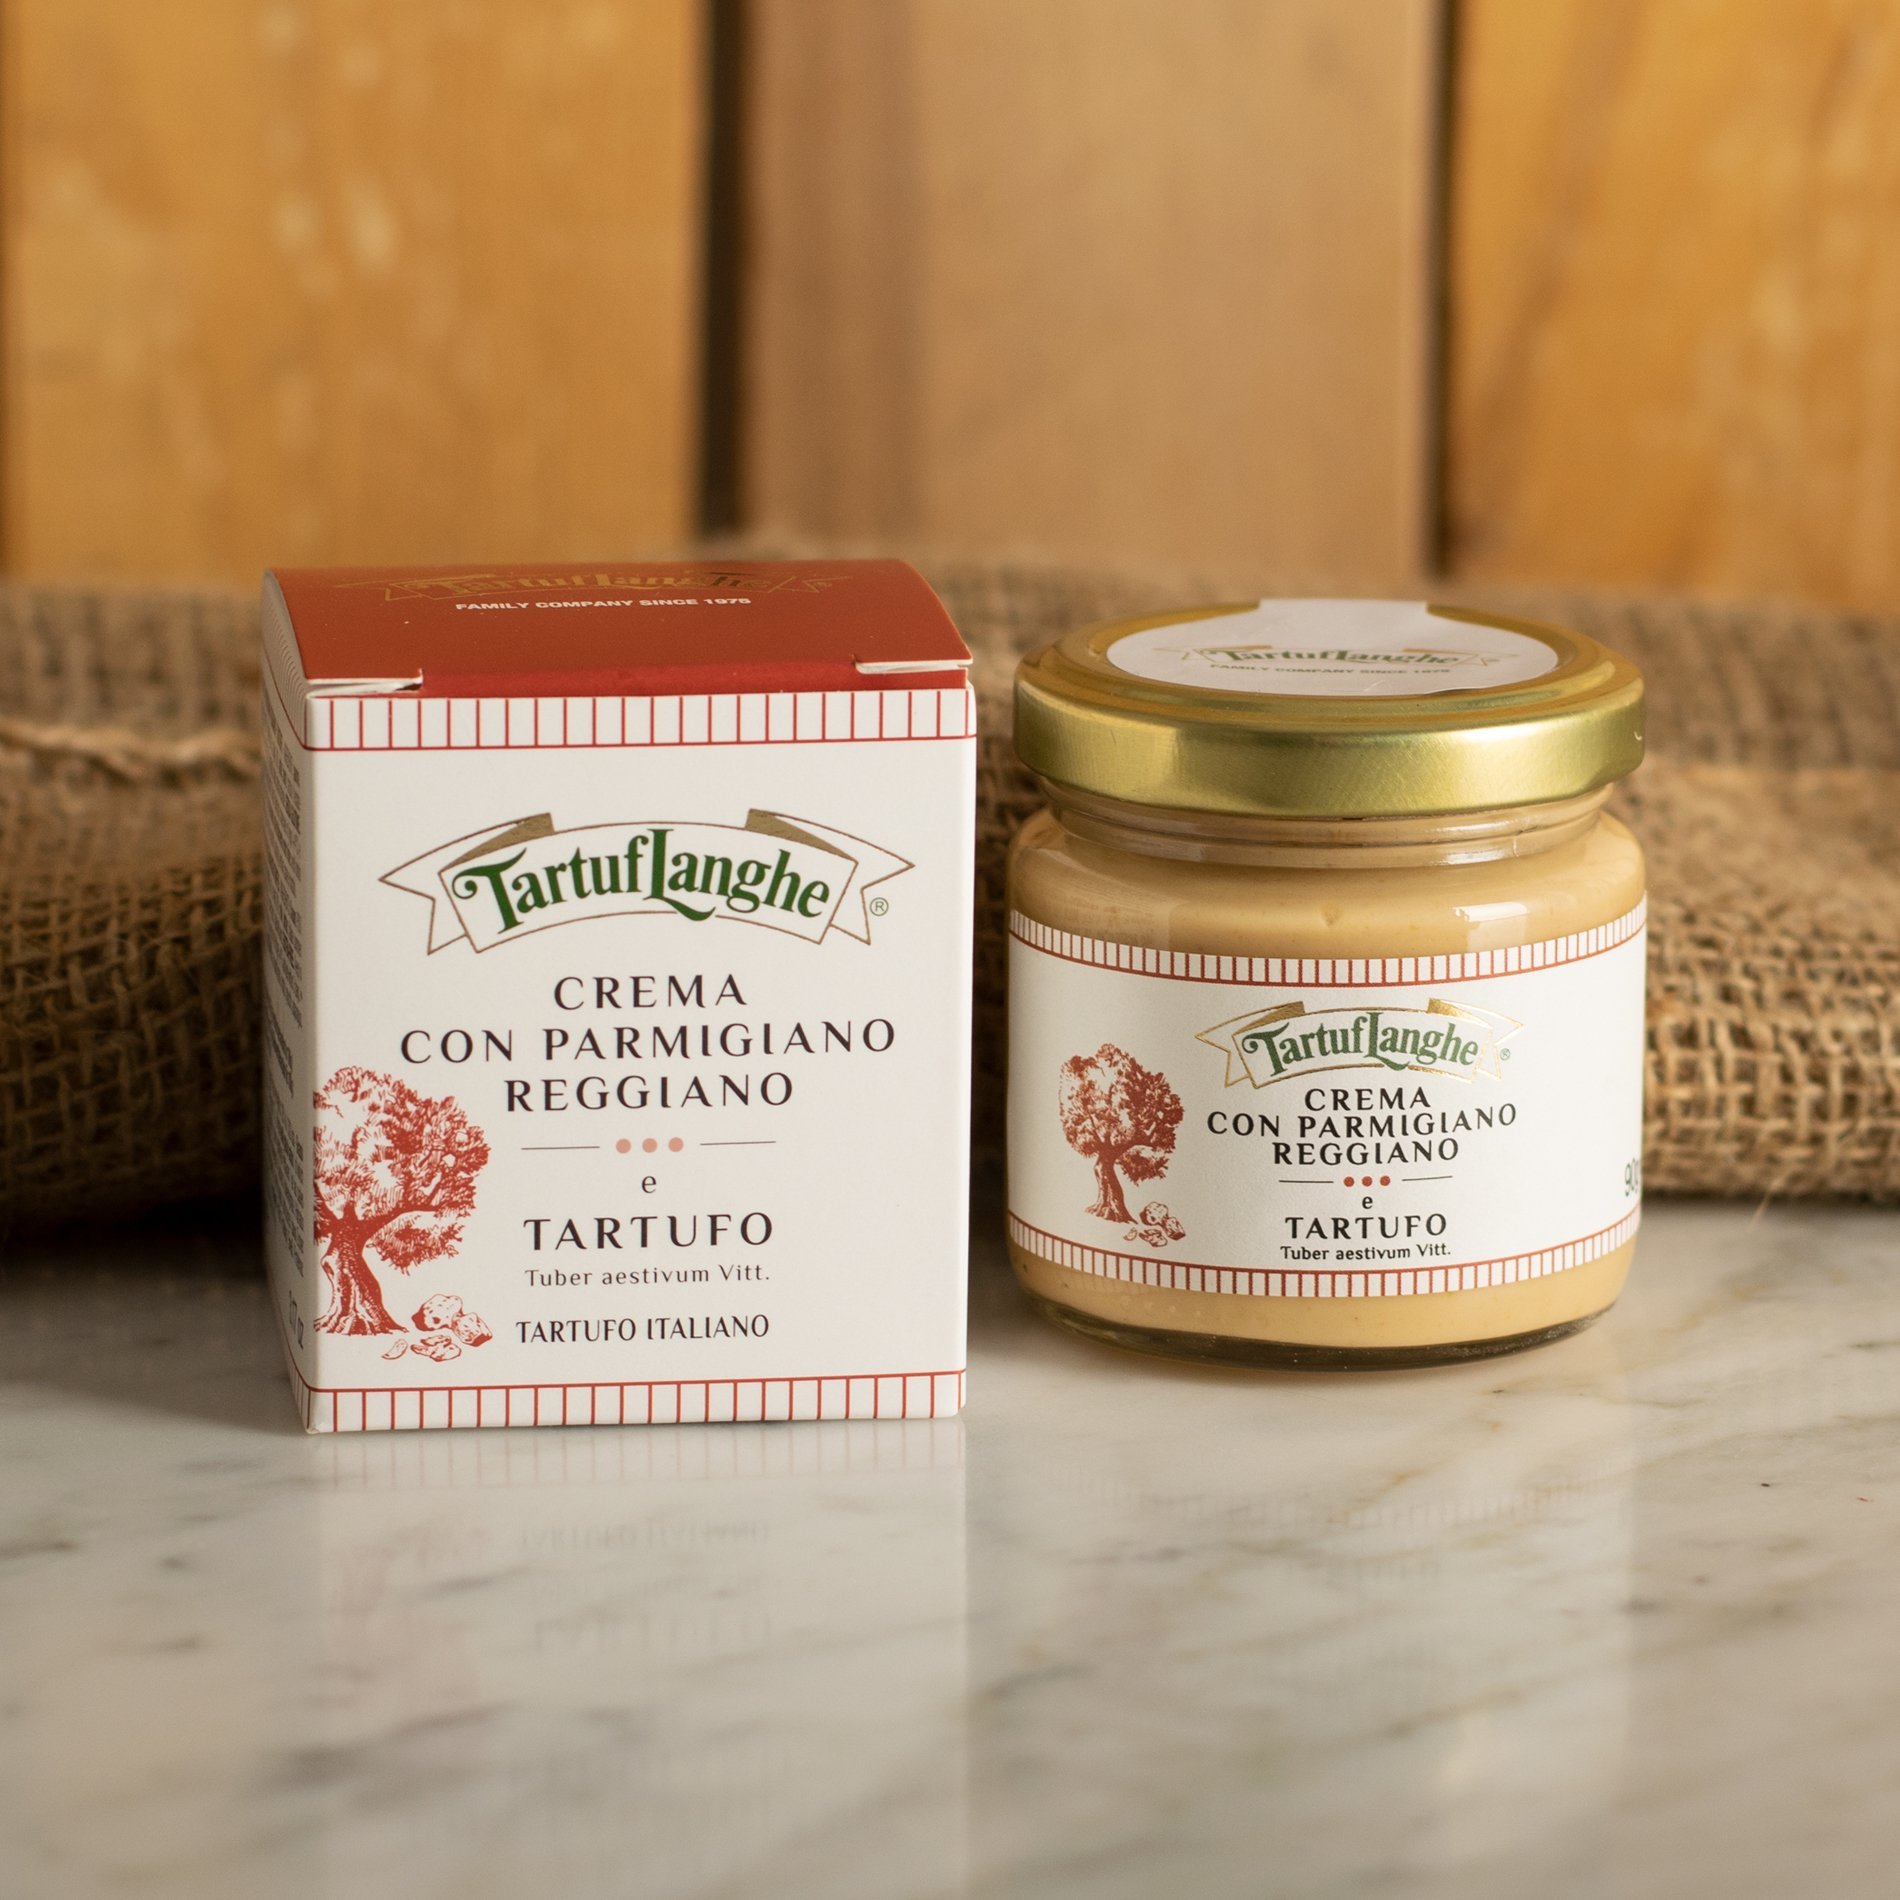 Parmigiano Reggiano DOP cream sauce with Truffle